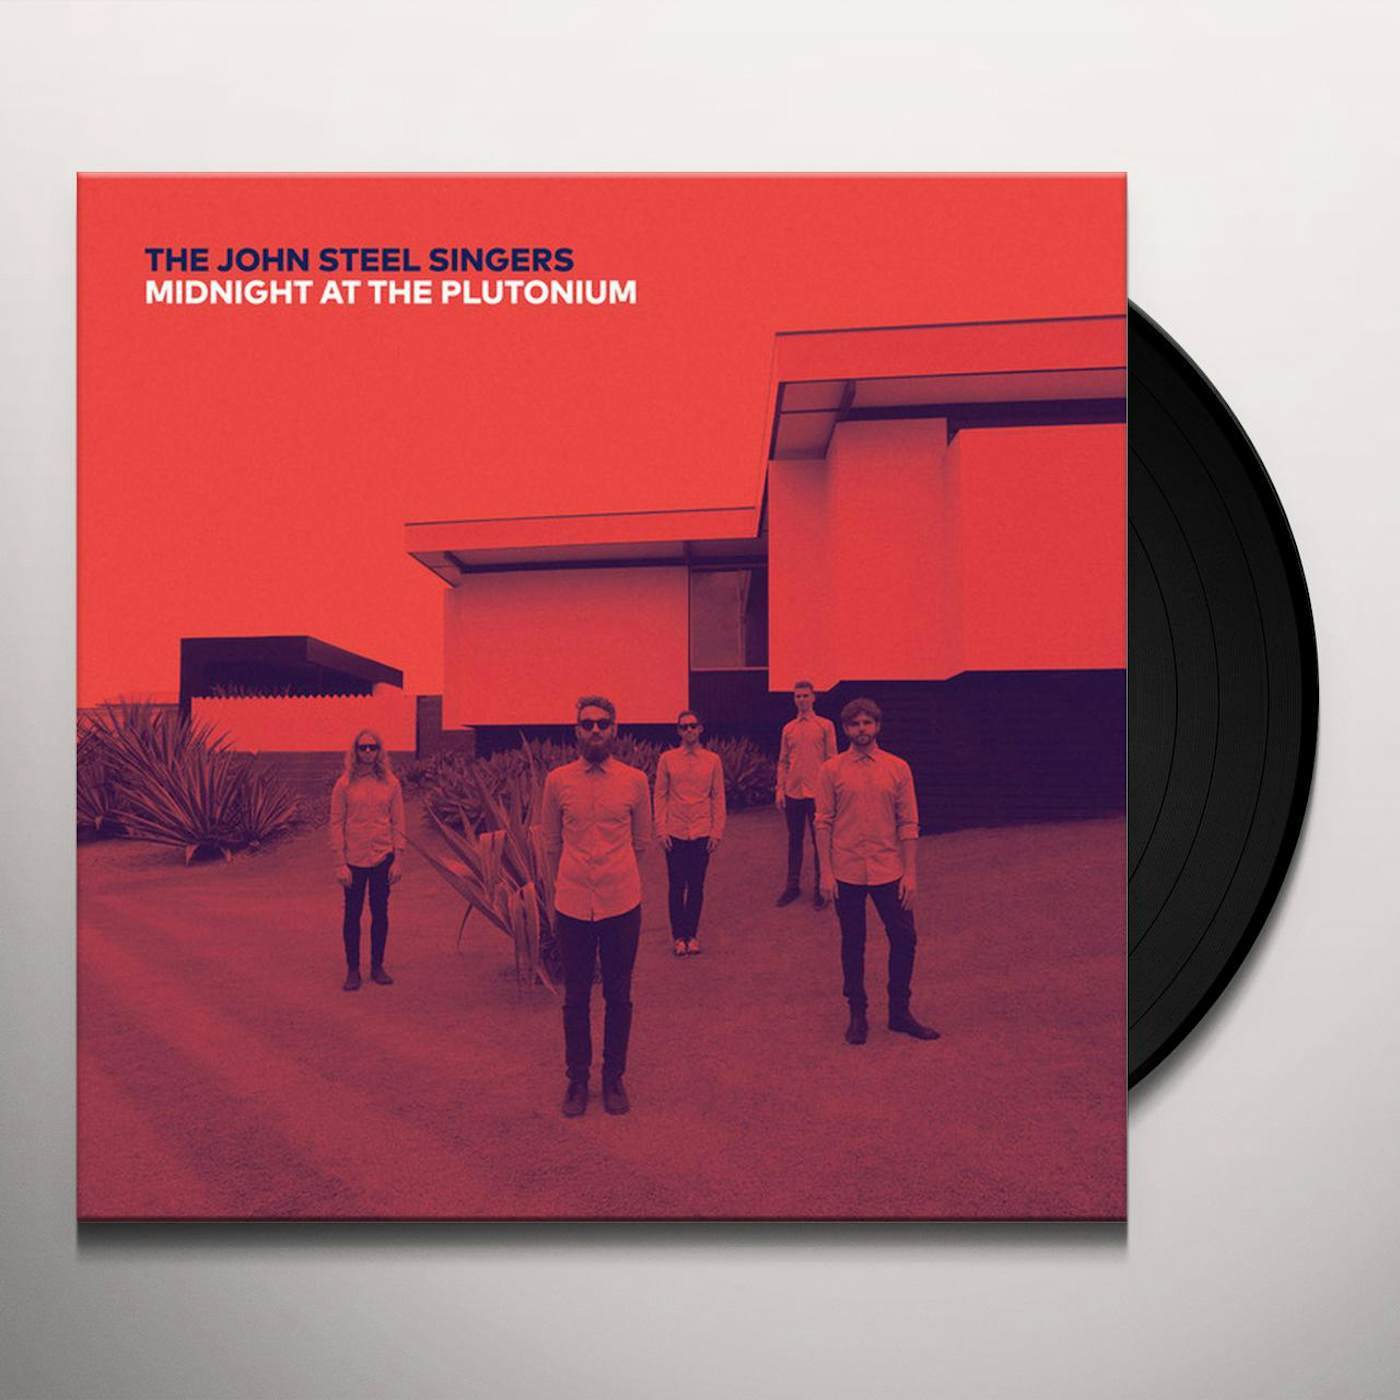 The John Steel Singers Midnight At The Plutonium Vinyl Record